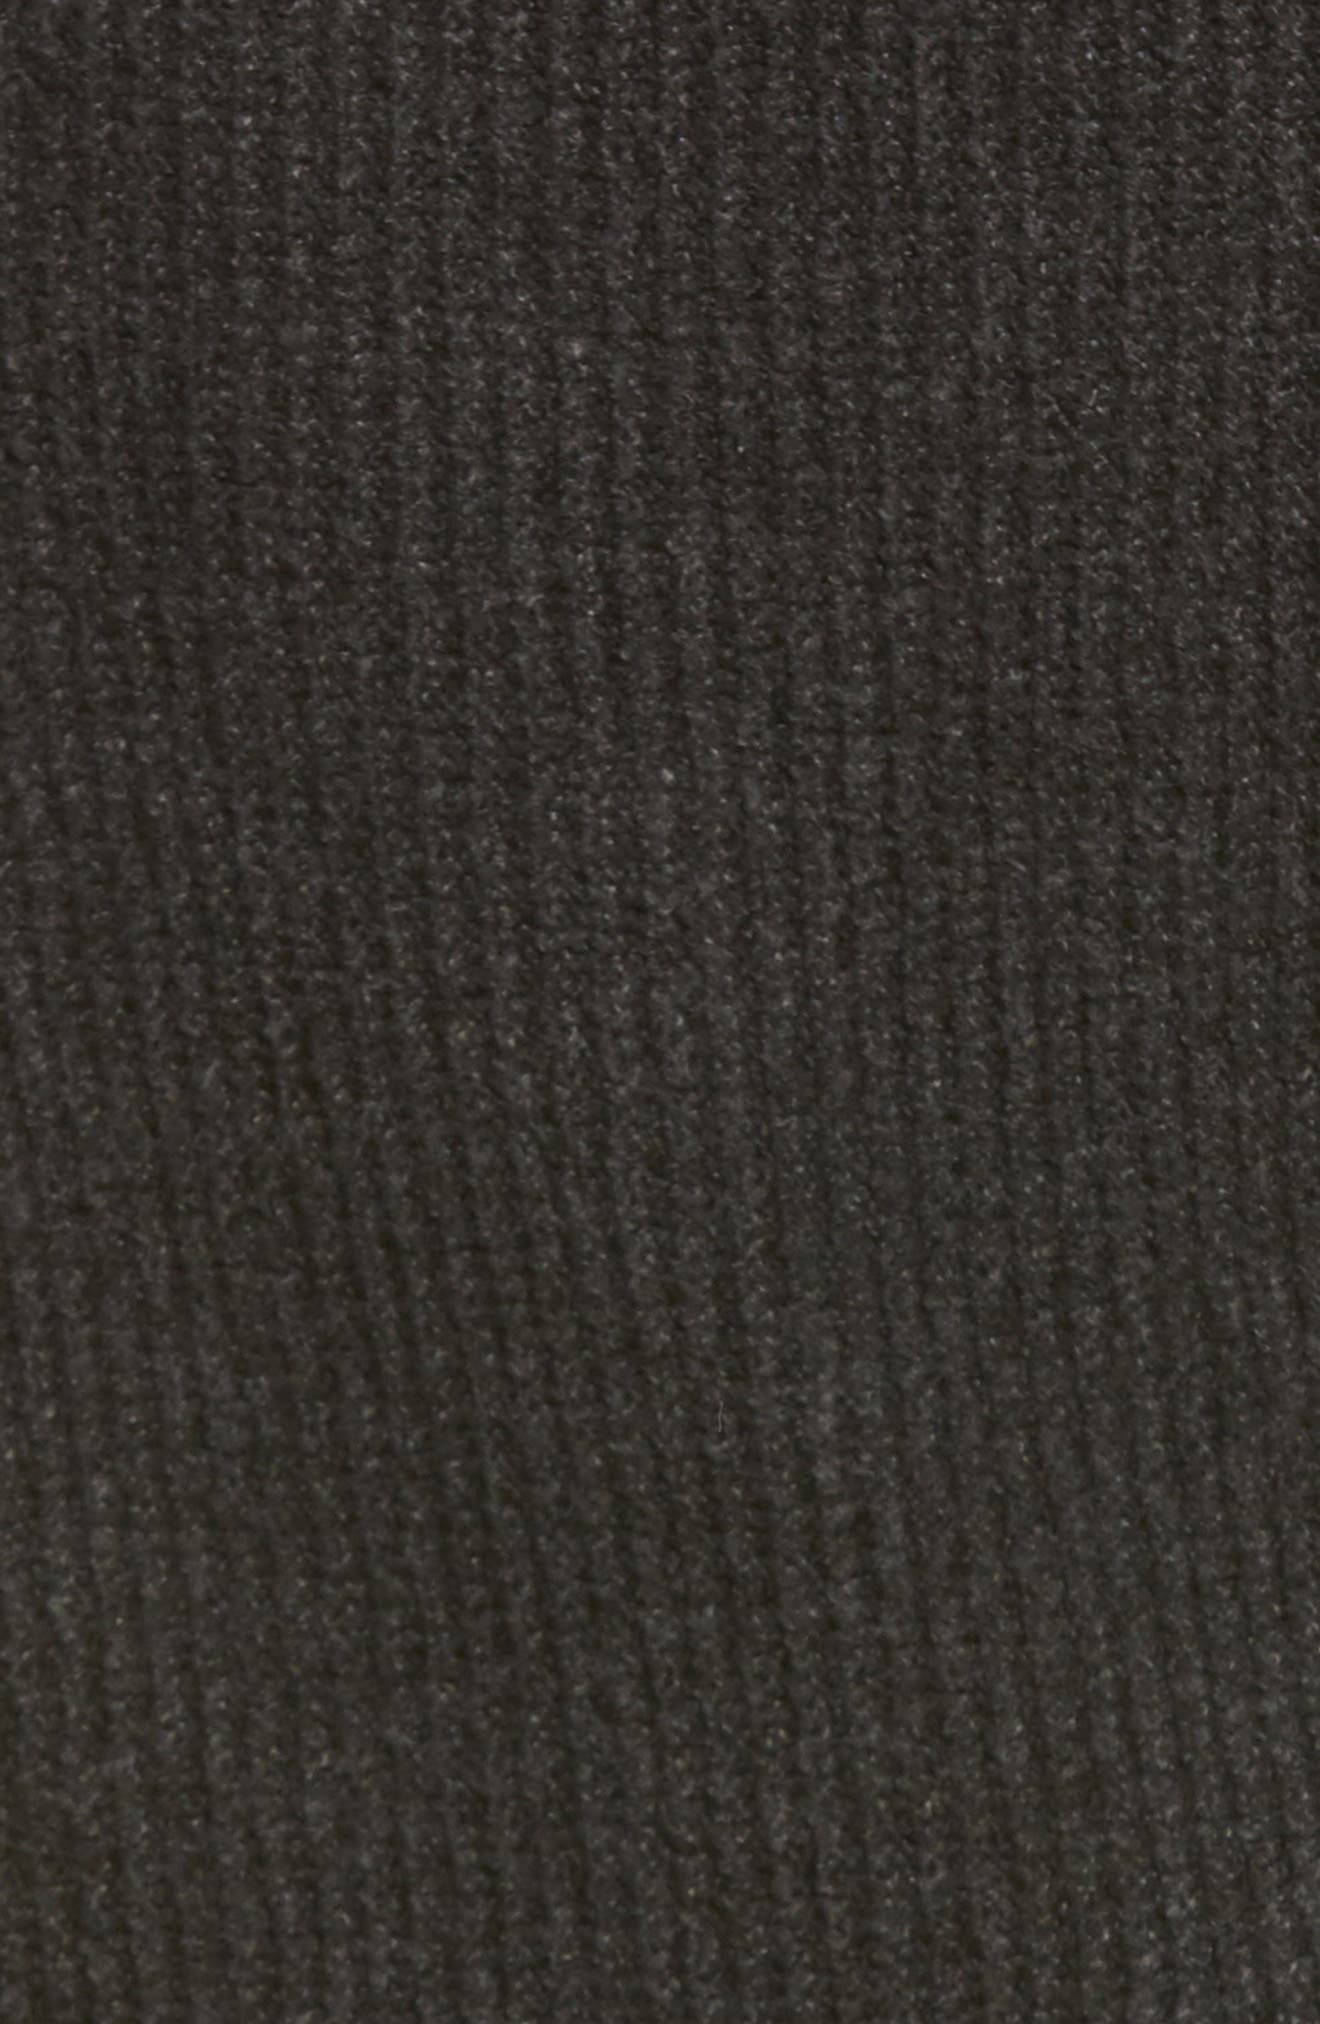 BP. Plaited Stitch Recycled Blend Crewneck Sweater, Alternate, color, BLACK